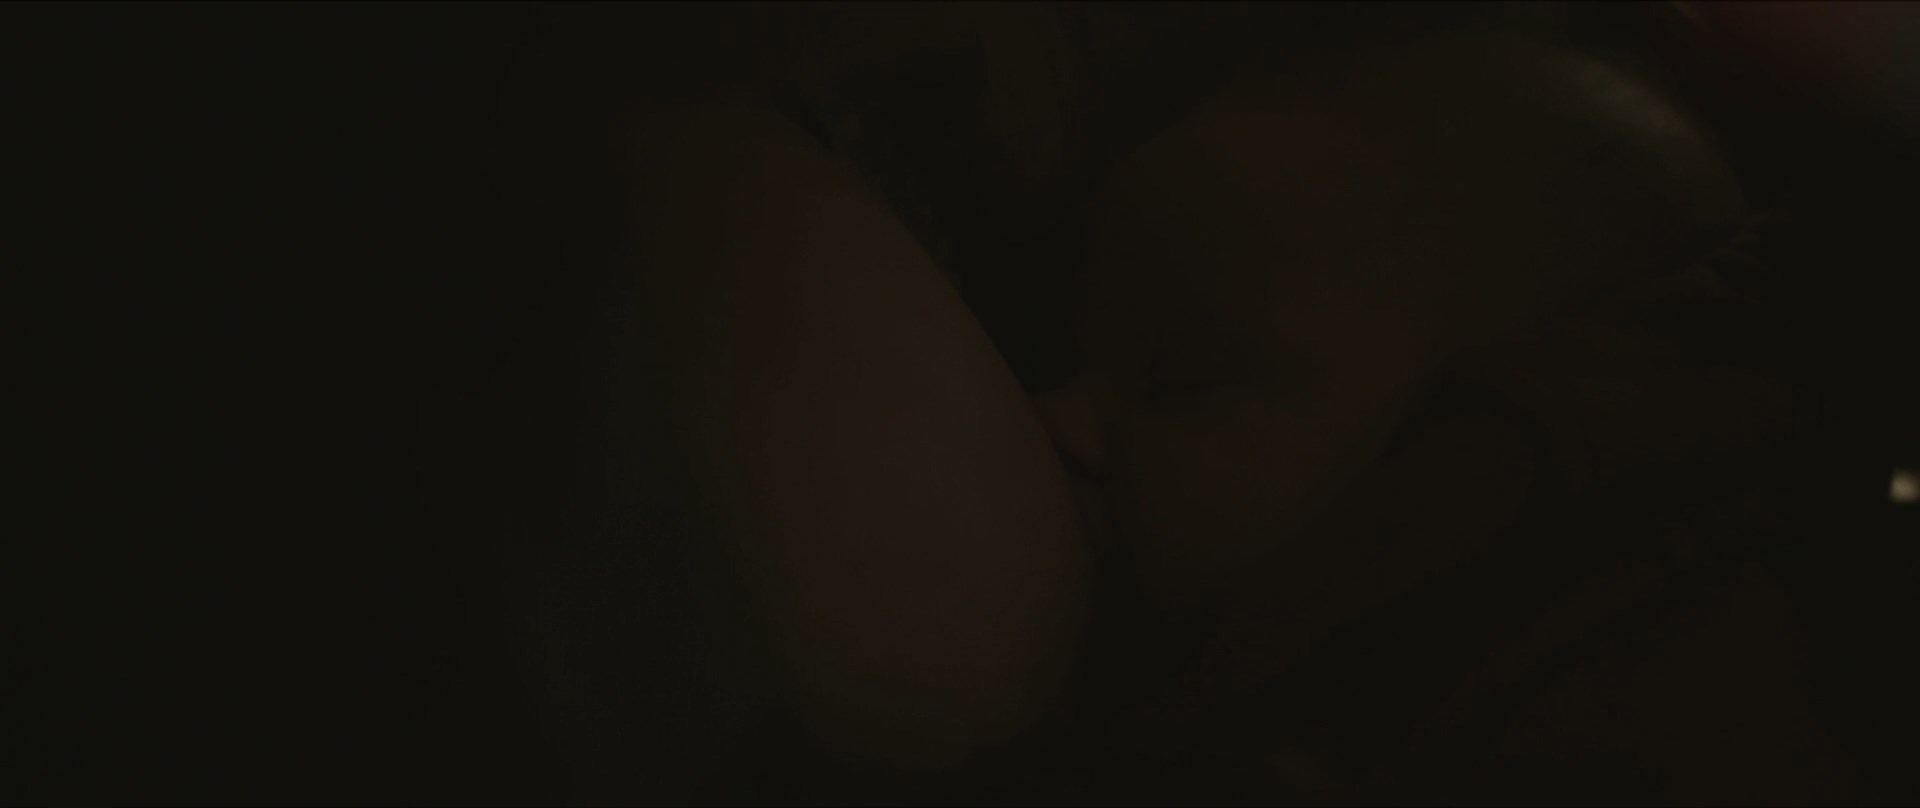 Дженезис родригез голая (71 фото) - секс фото